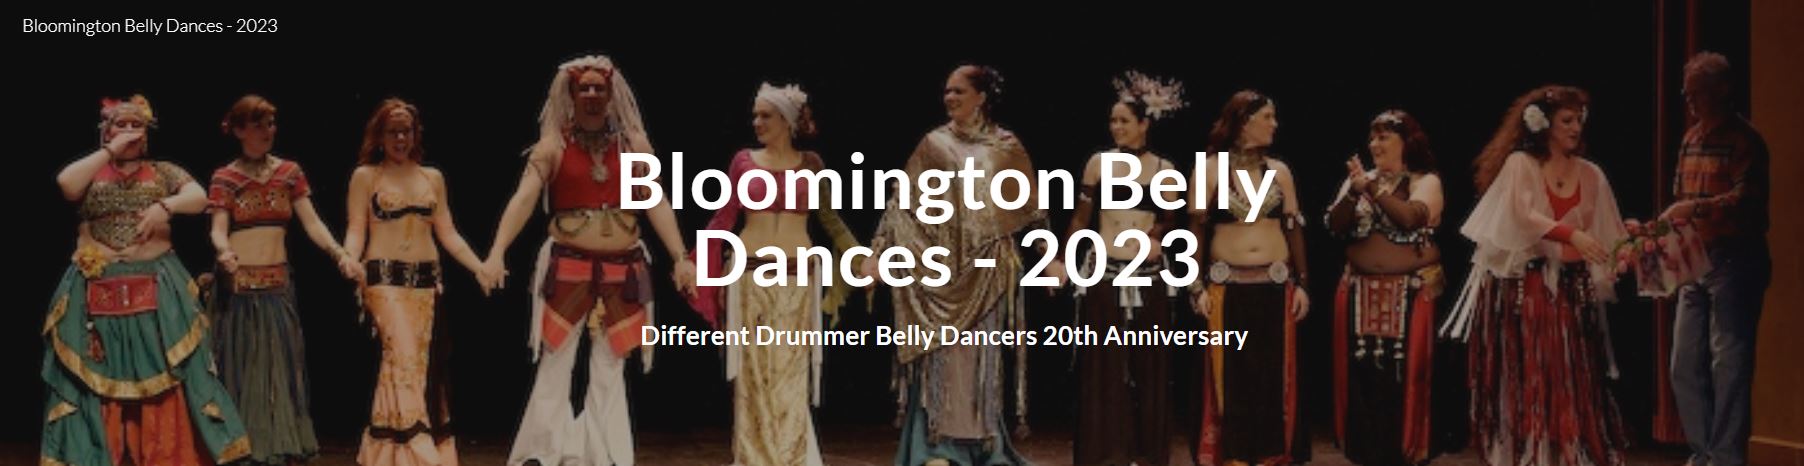 Bloomington Belly Dances - 2023 horizontal logo